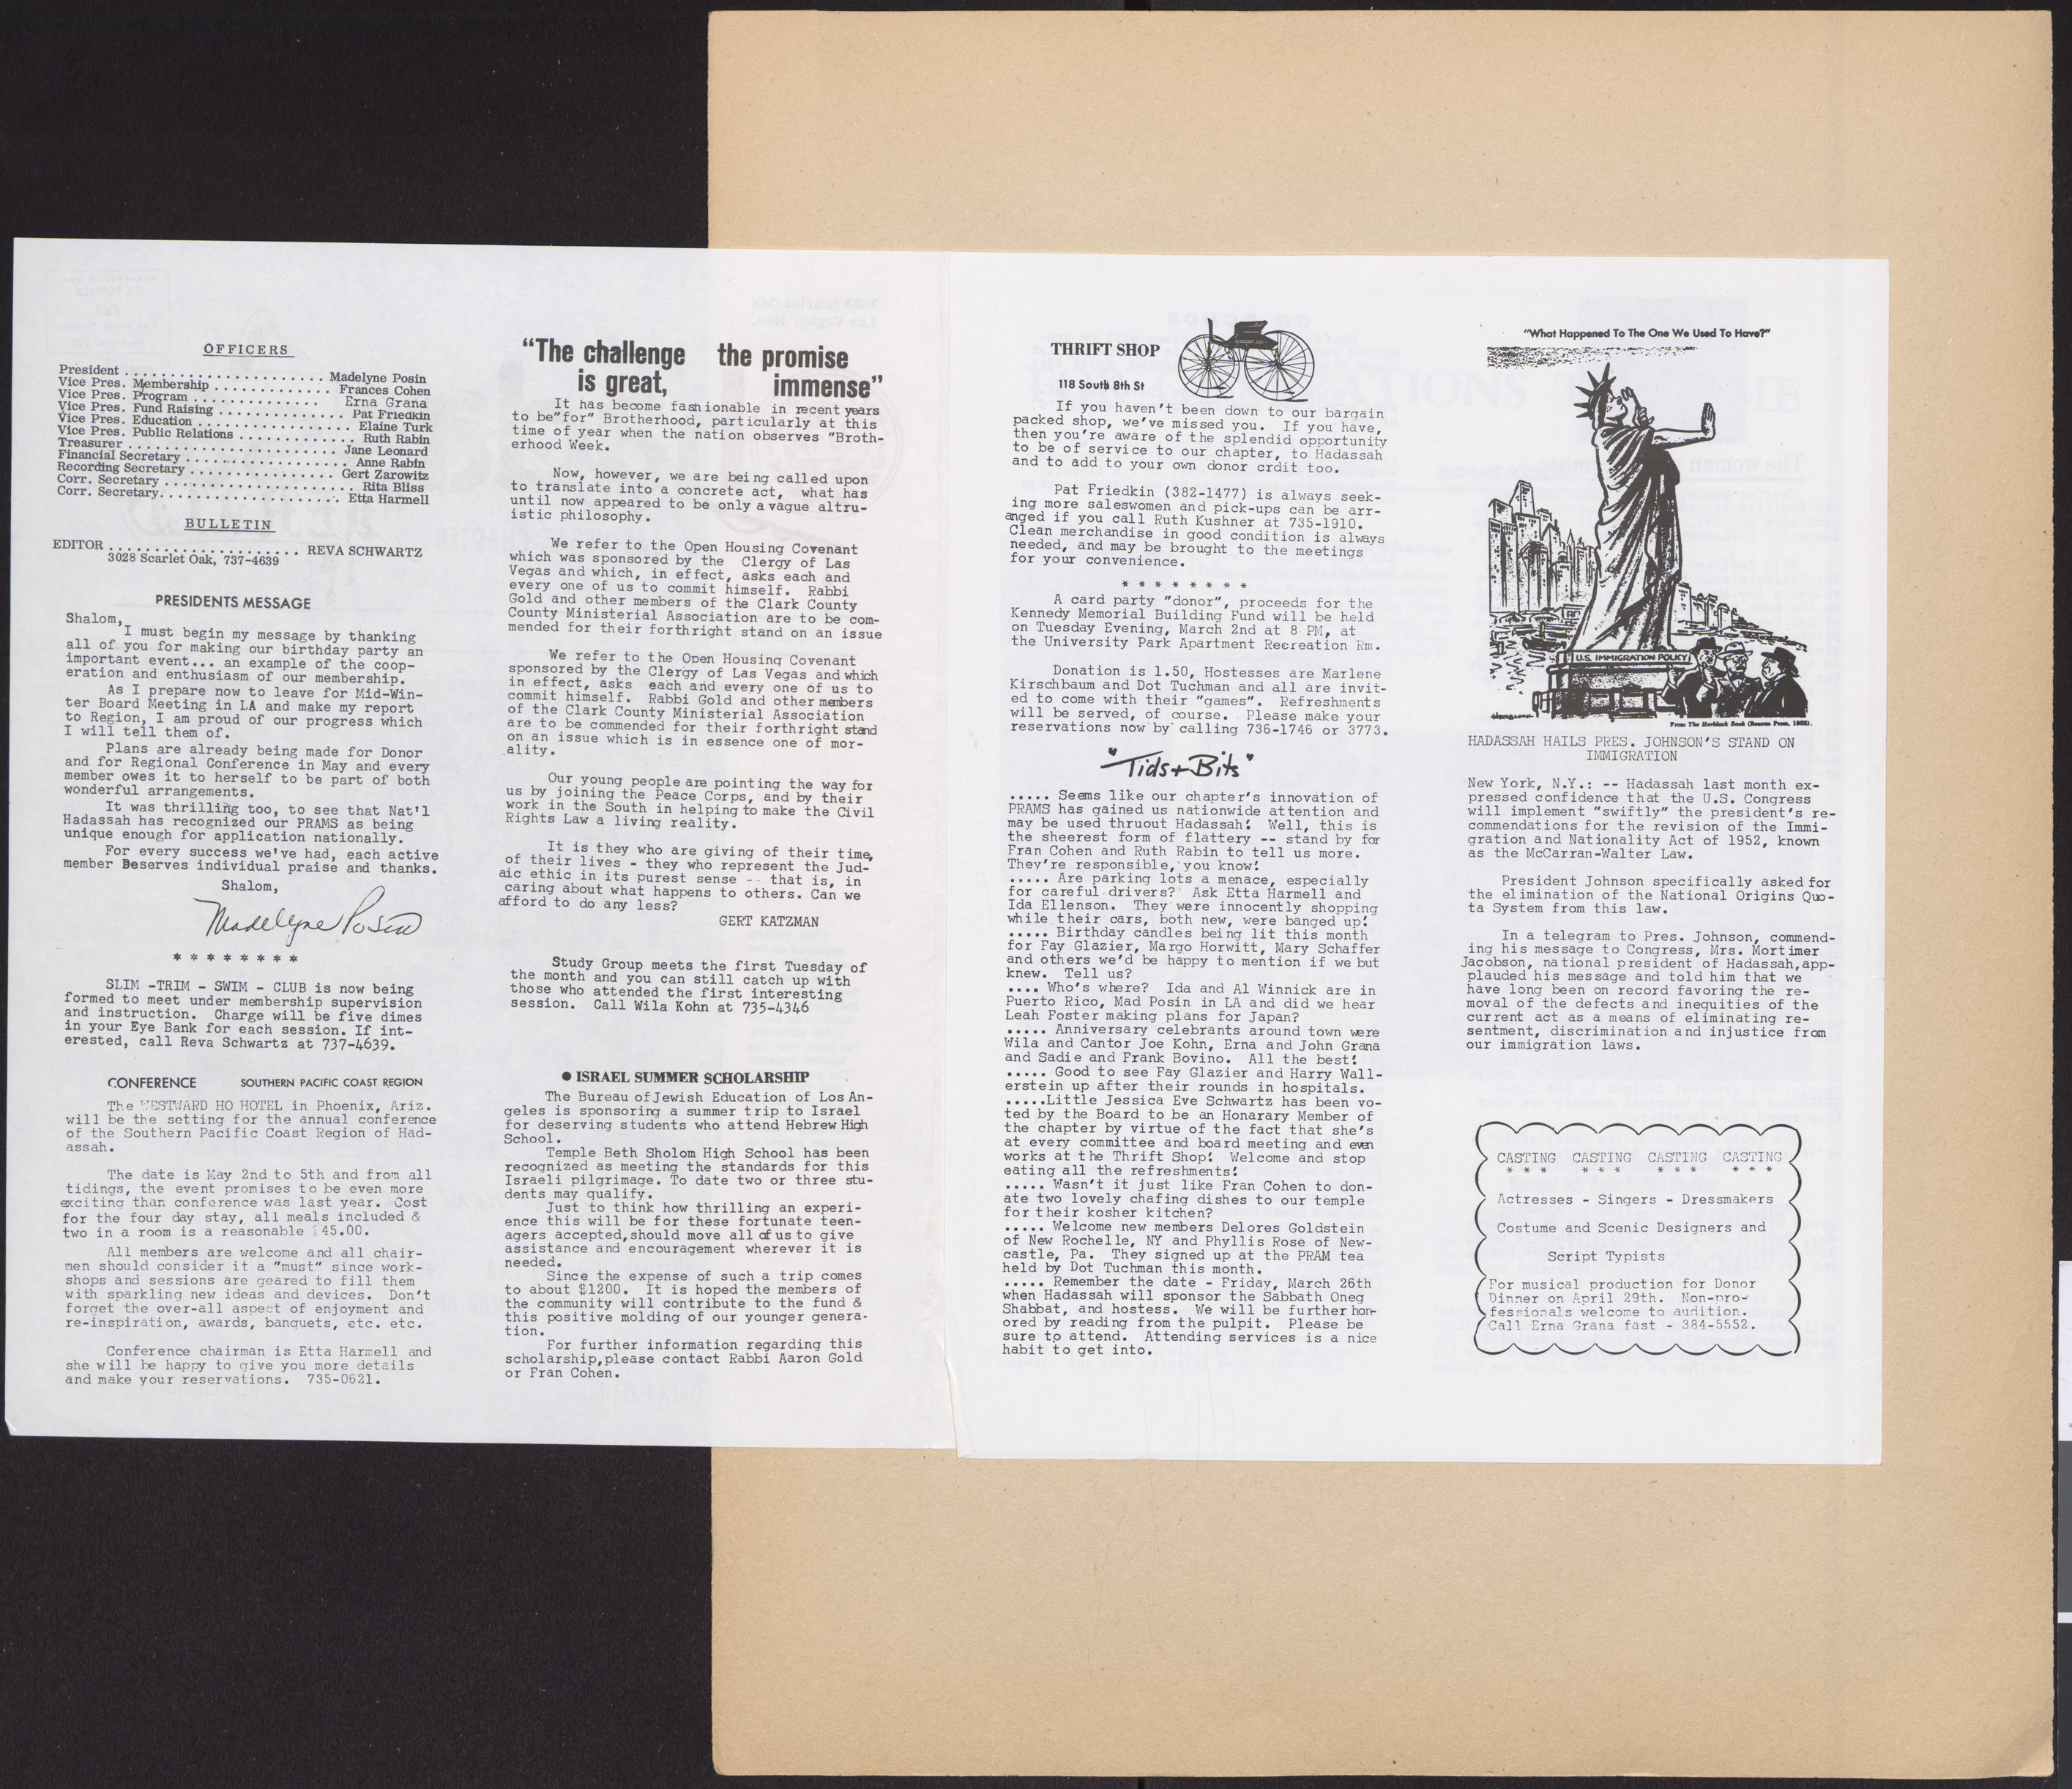 Hadassah Las Vegas Chapter newsletter, February 1965, page 2-3